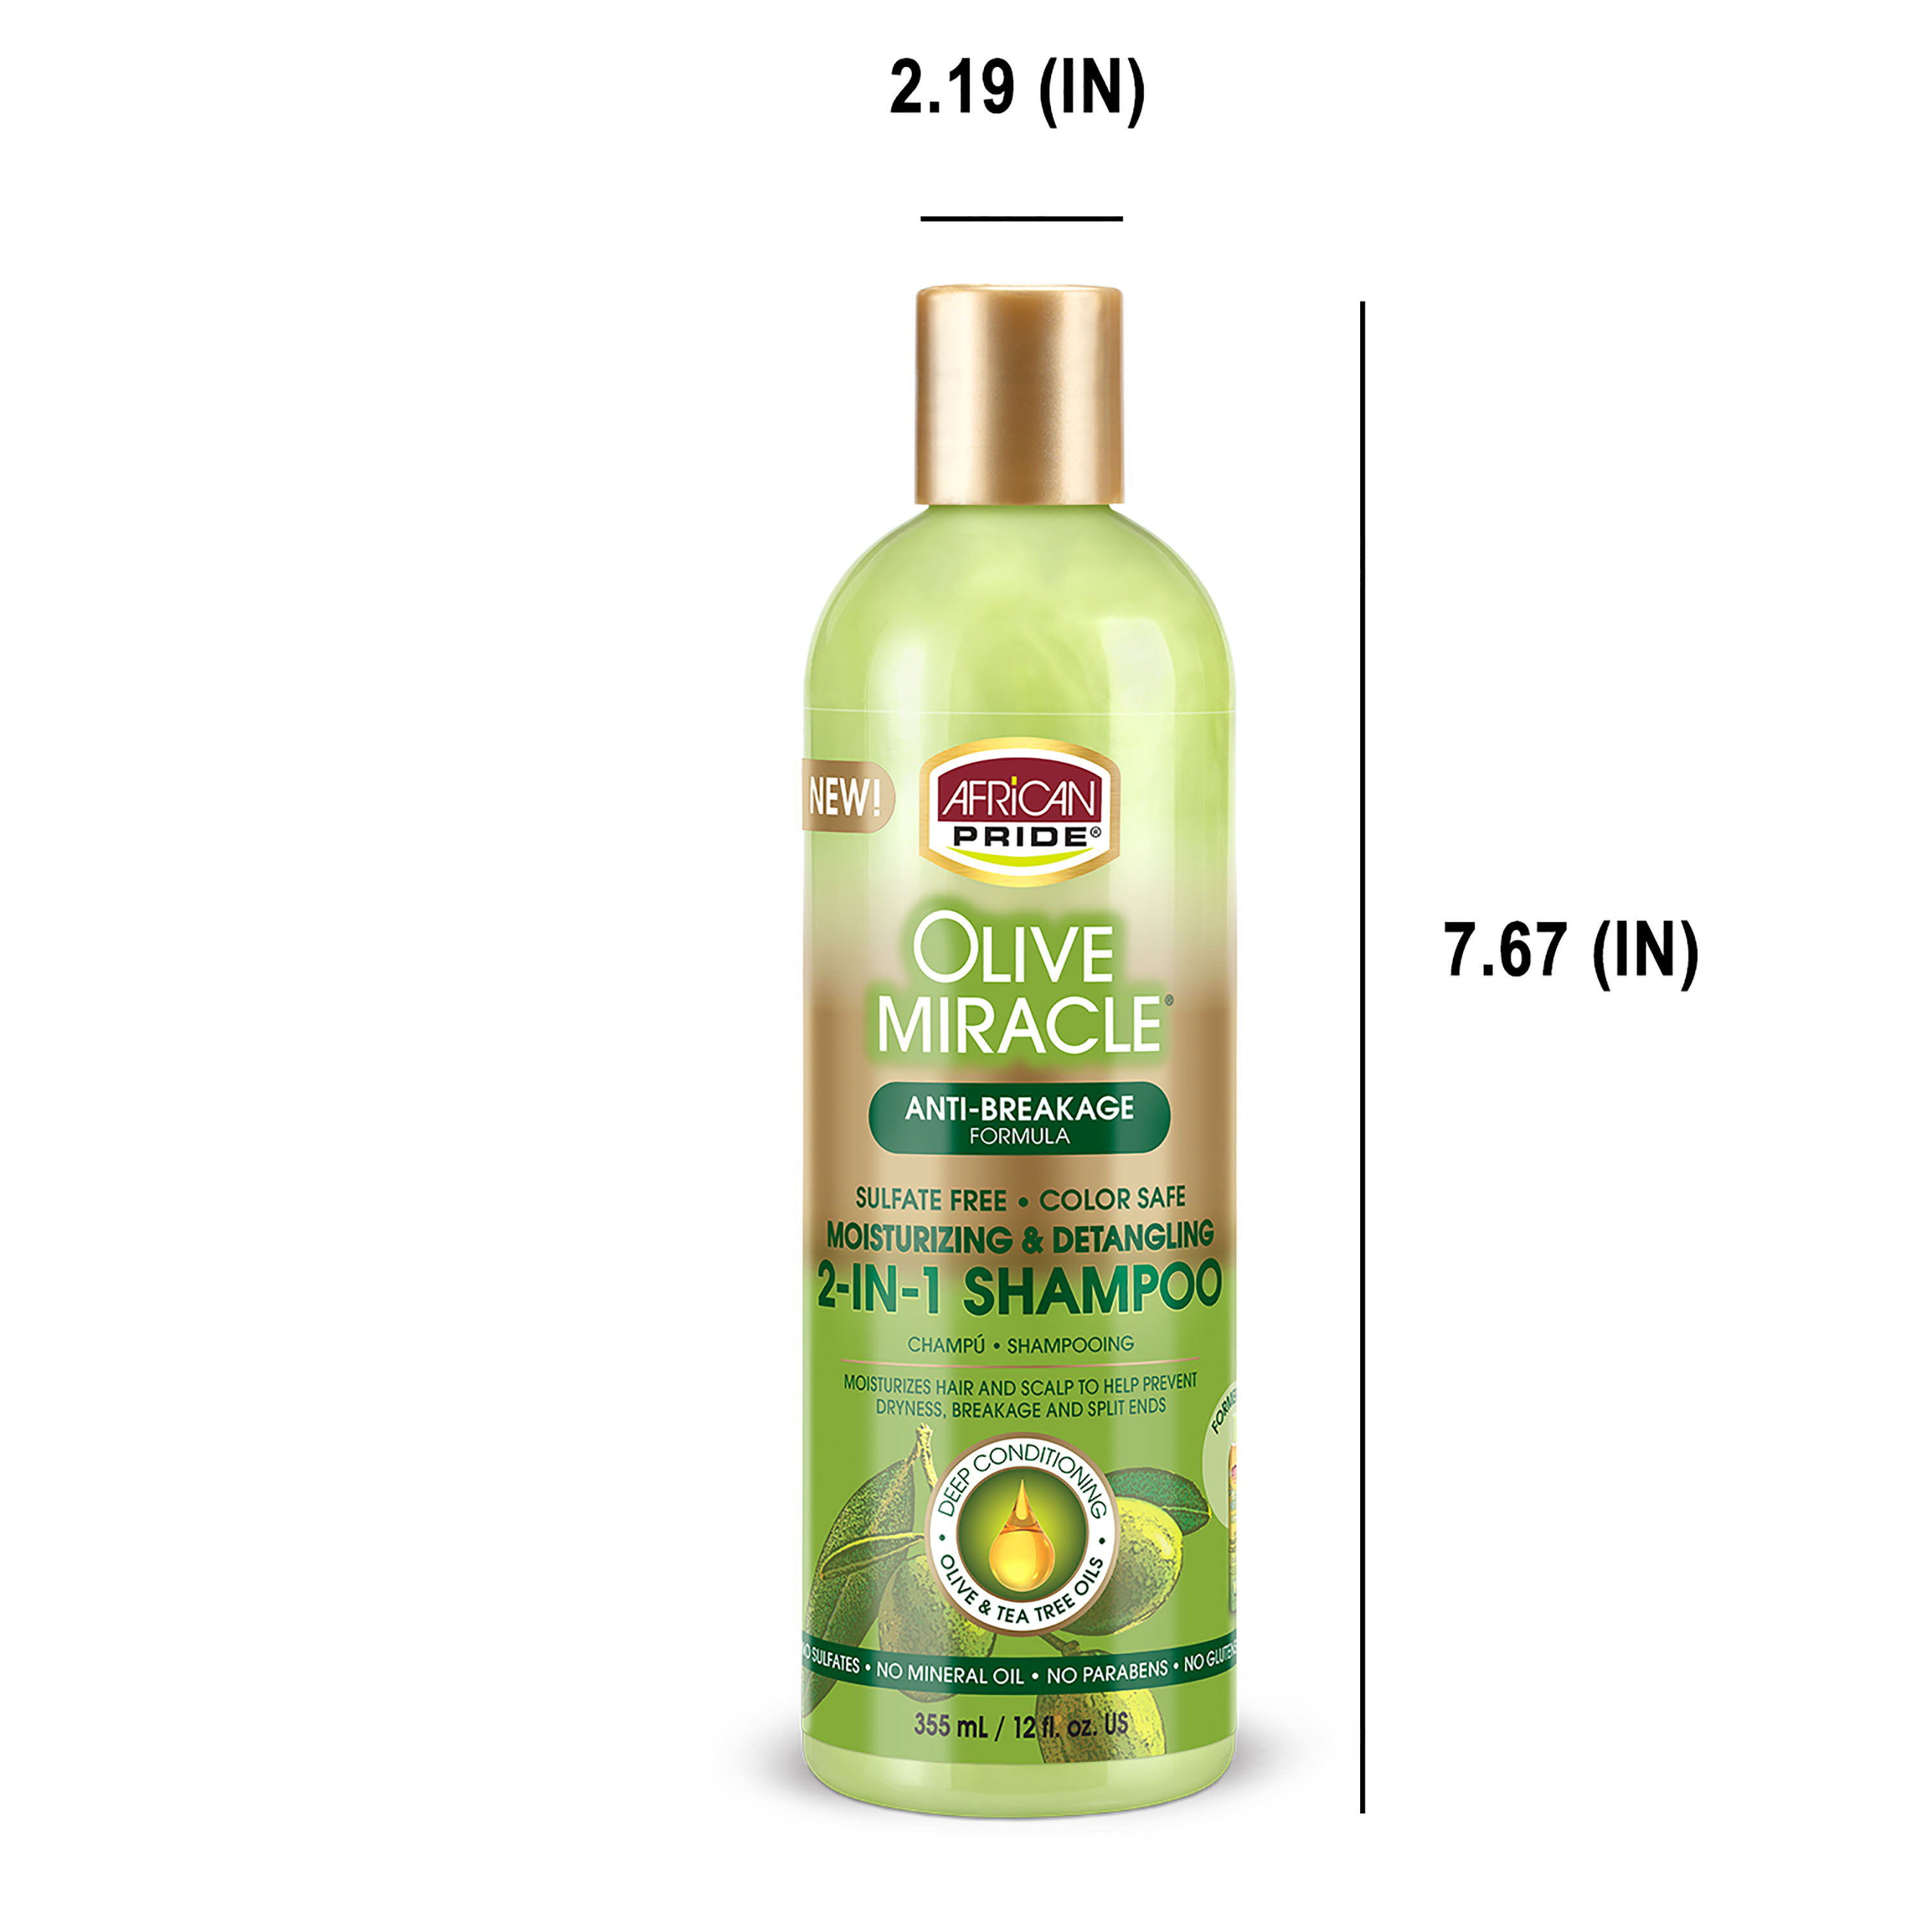 African Pride Olive Miracle Detangling Moisturizing Anti-Breakage Formula 2-in-1 Shampoo Plus Conditioner, 12 fl oz - image 5 of 7